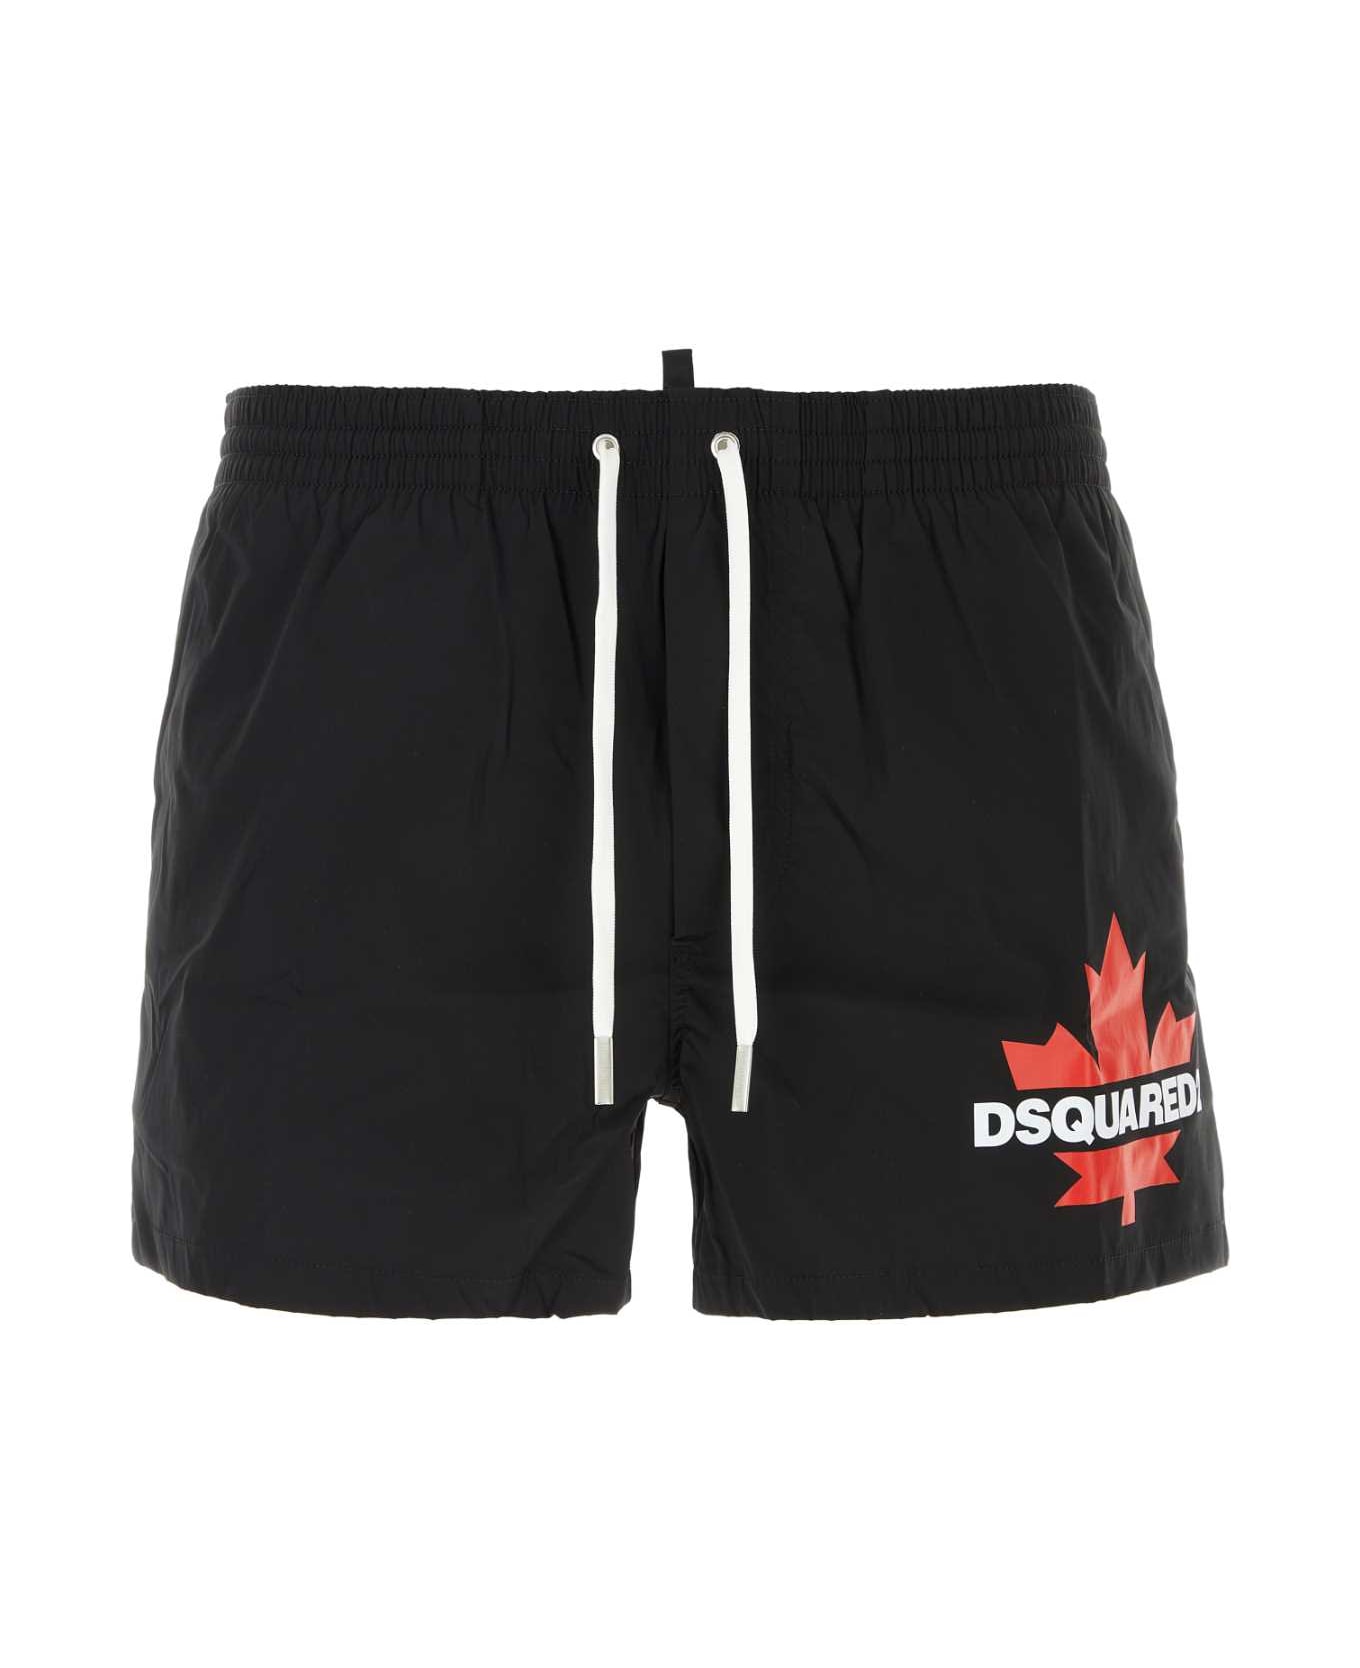 Dsquared2 Black Stretch Nylon Swimming Shorts - BLACK